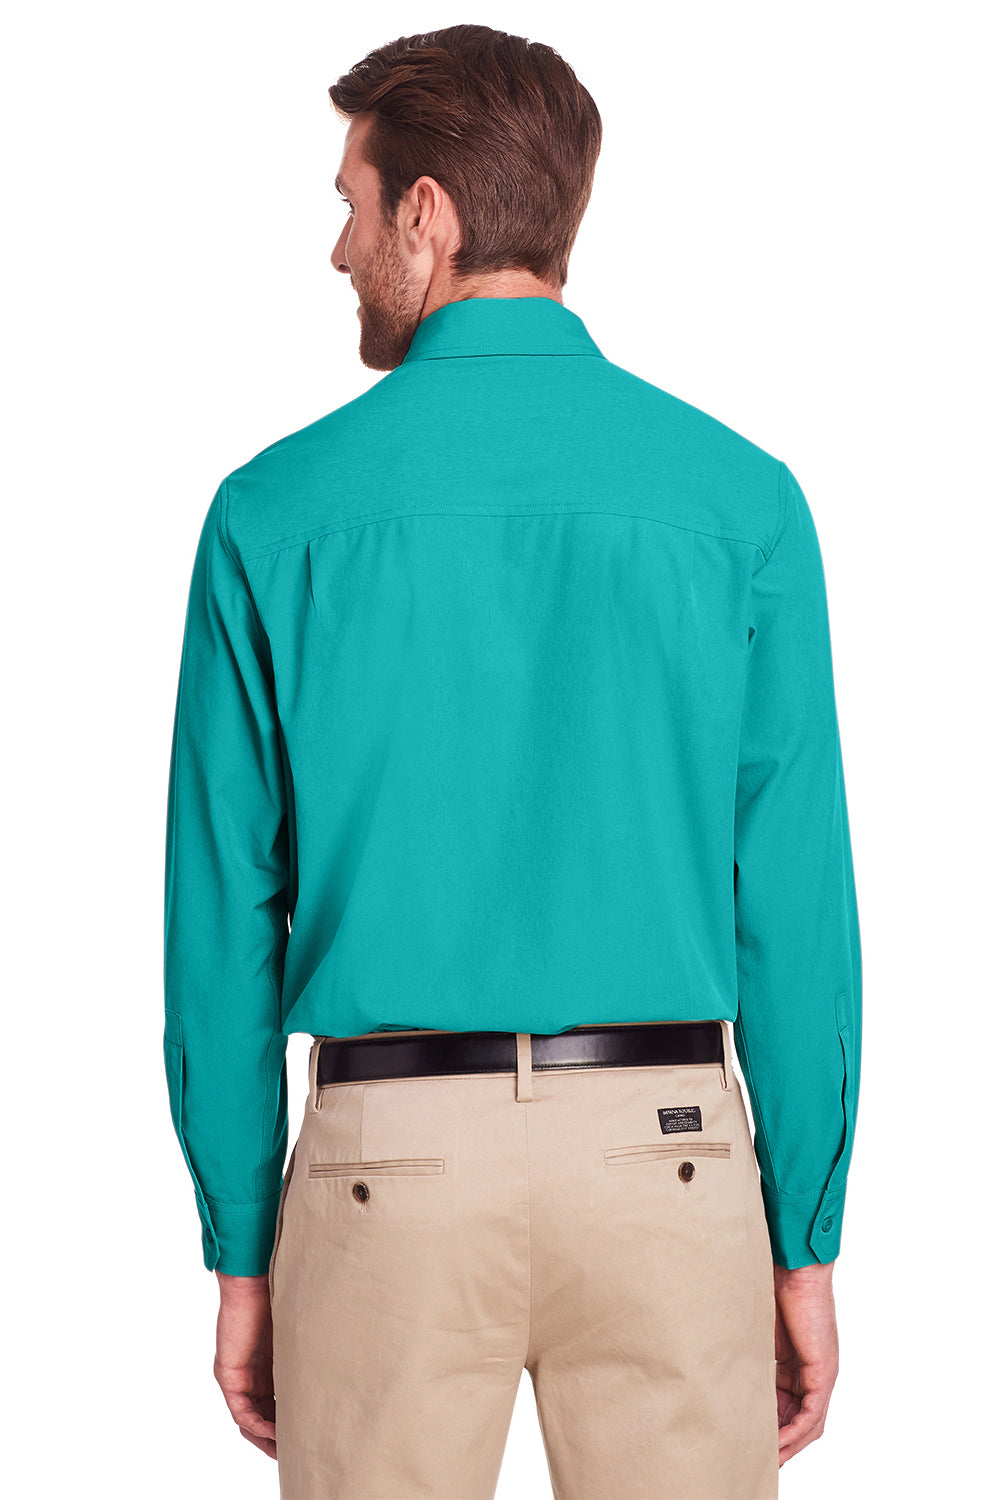 UltraClub UC500 Mens Bradley Performance Moisture Wicking Long Sleeve Button Down Shirt w/ Pocket Jade Green Back